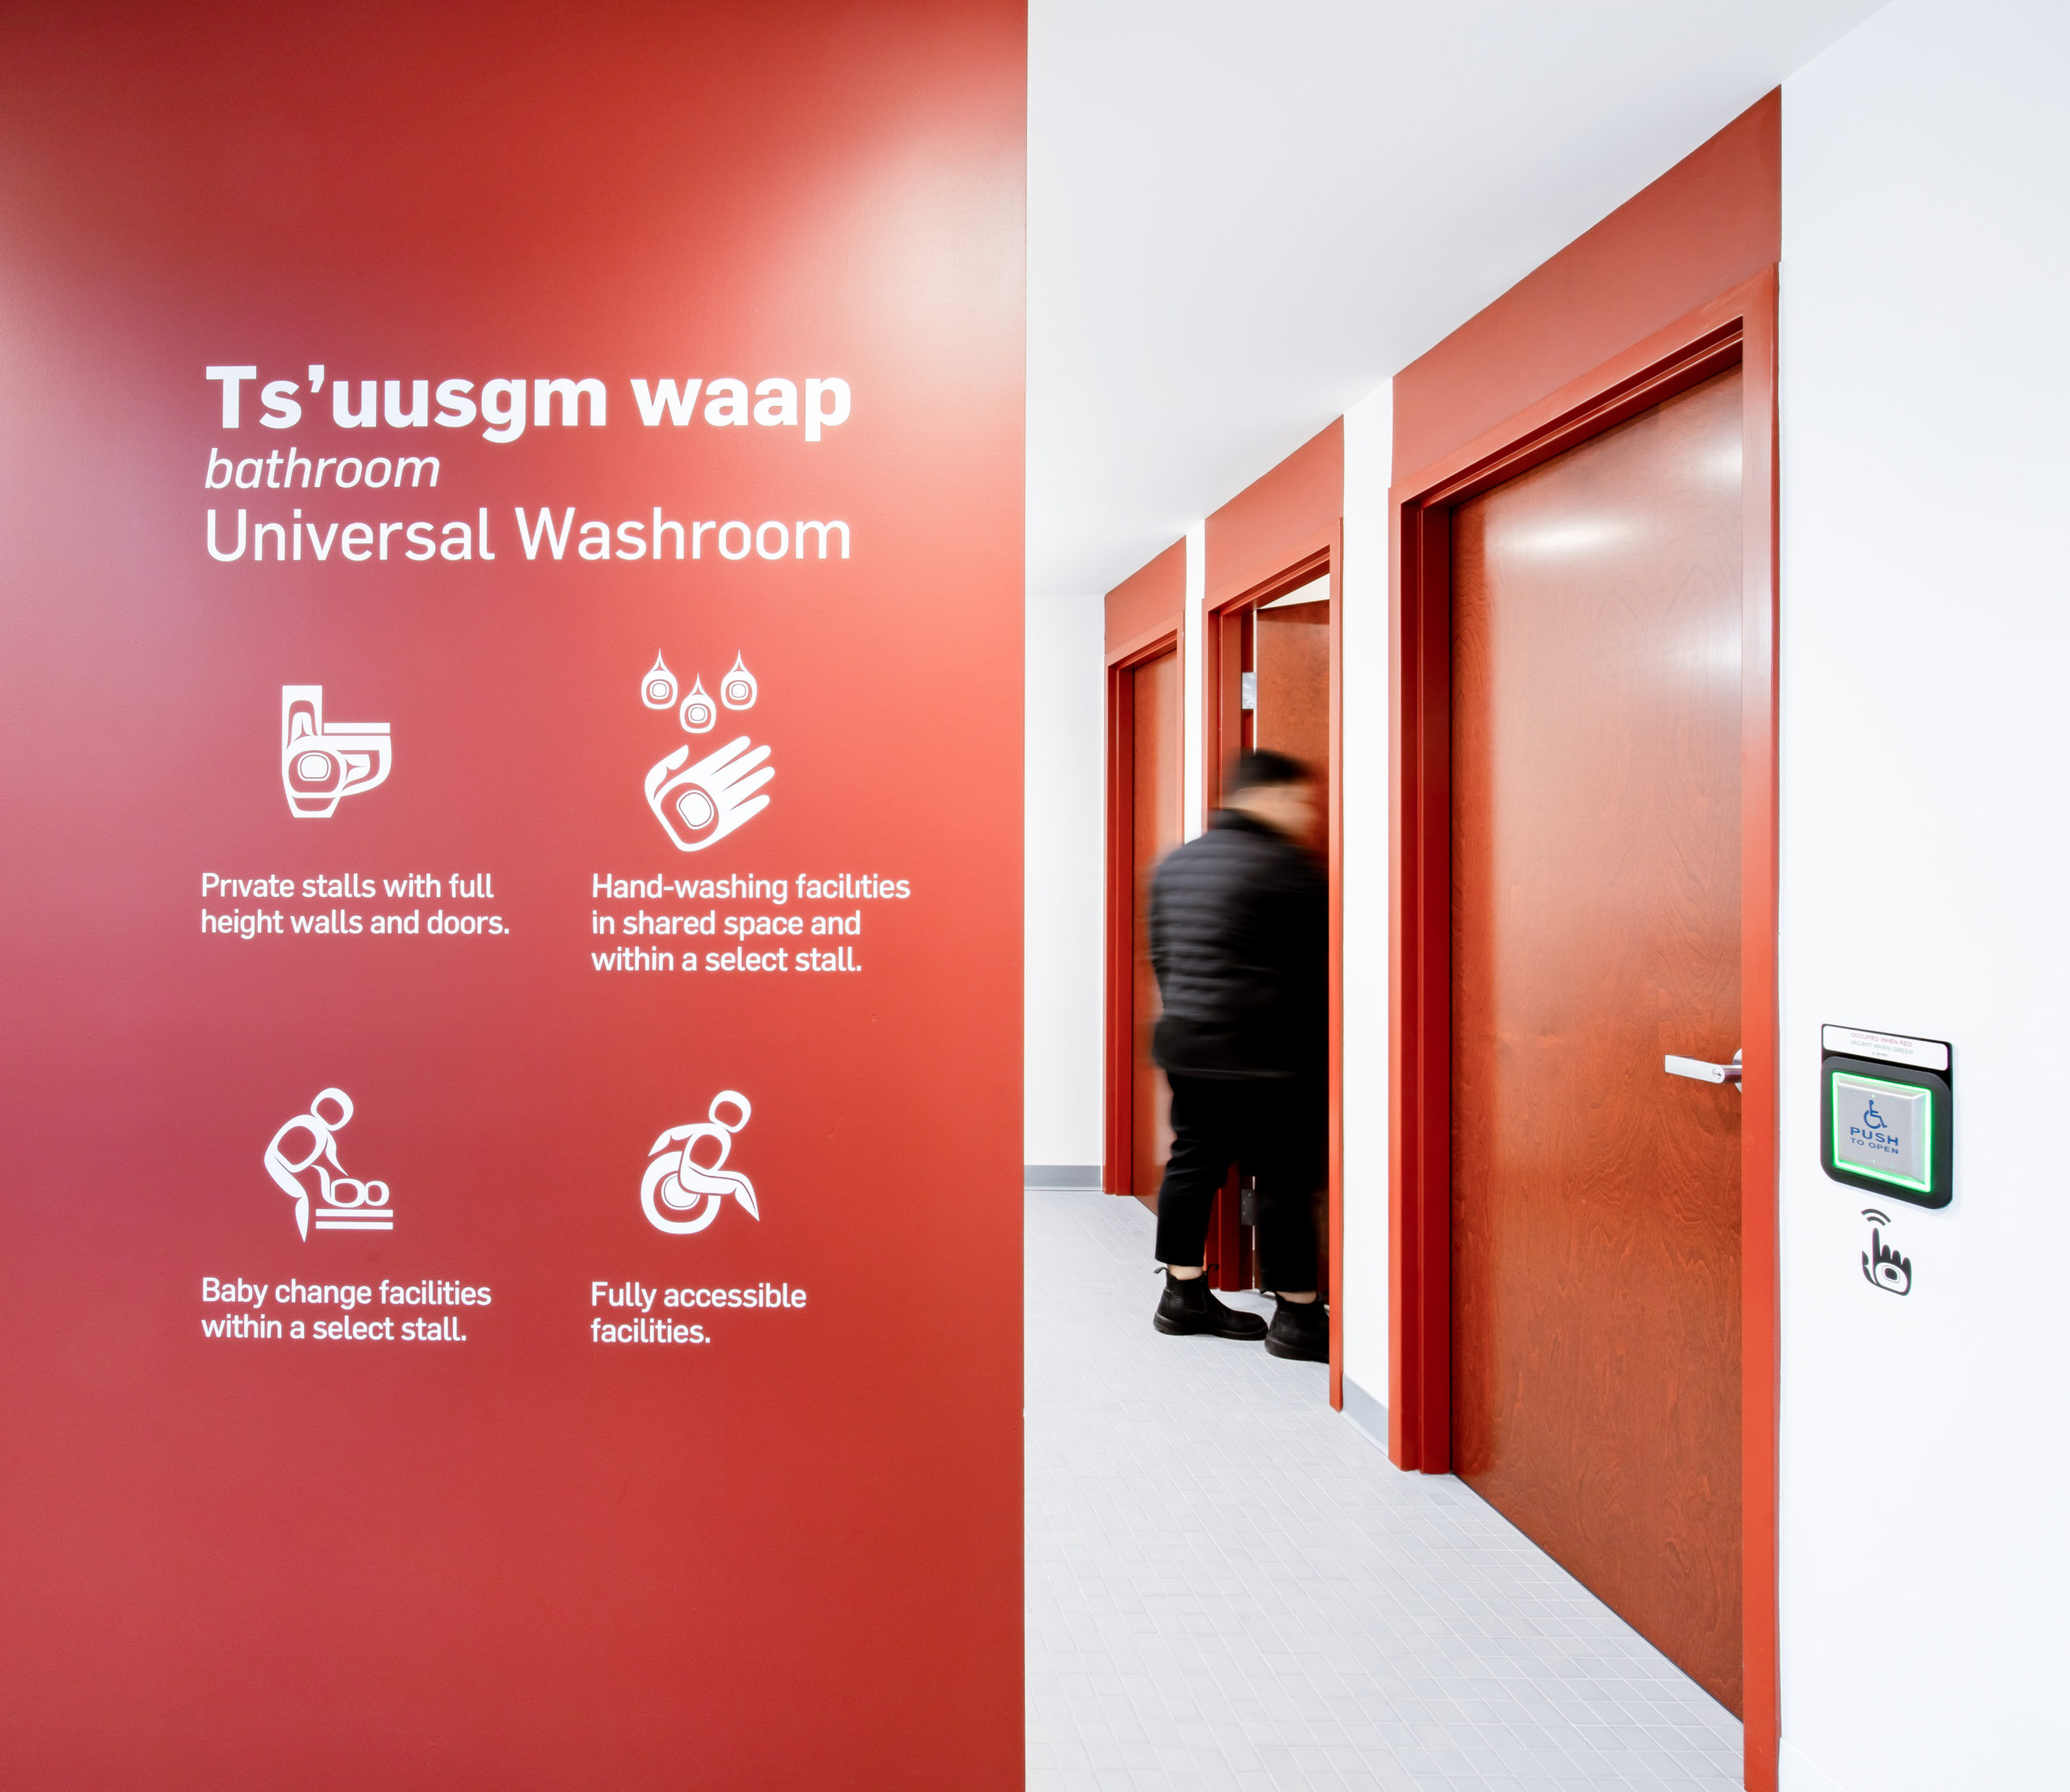 Wii Gyemsiga Siwilaawksat Student Building pictogram universal washroom